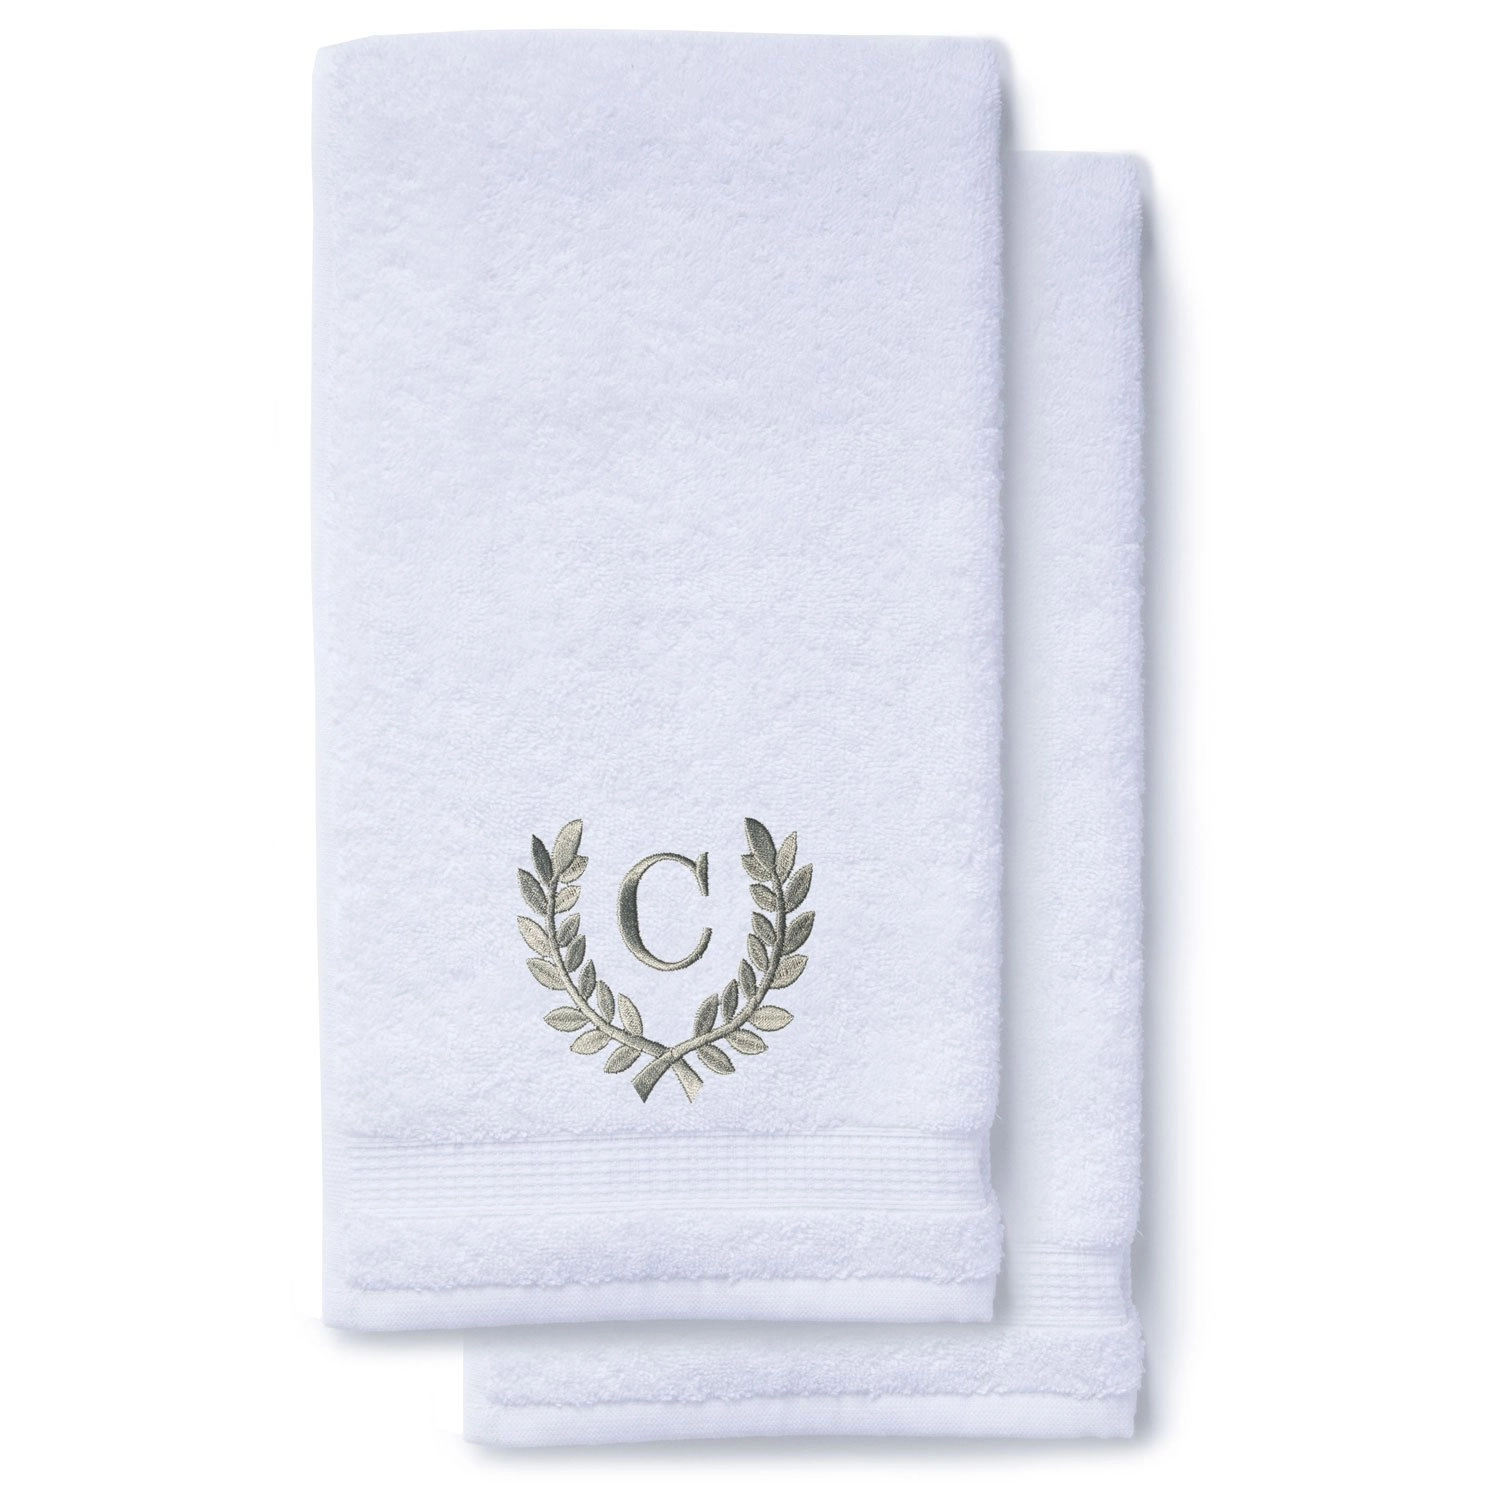 https://robemart.com/images/thumbnails/detailed/7/C--Gray-stacked-Monogrammed-Hand-Towels.webp